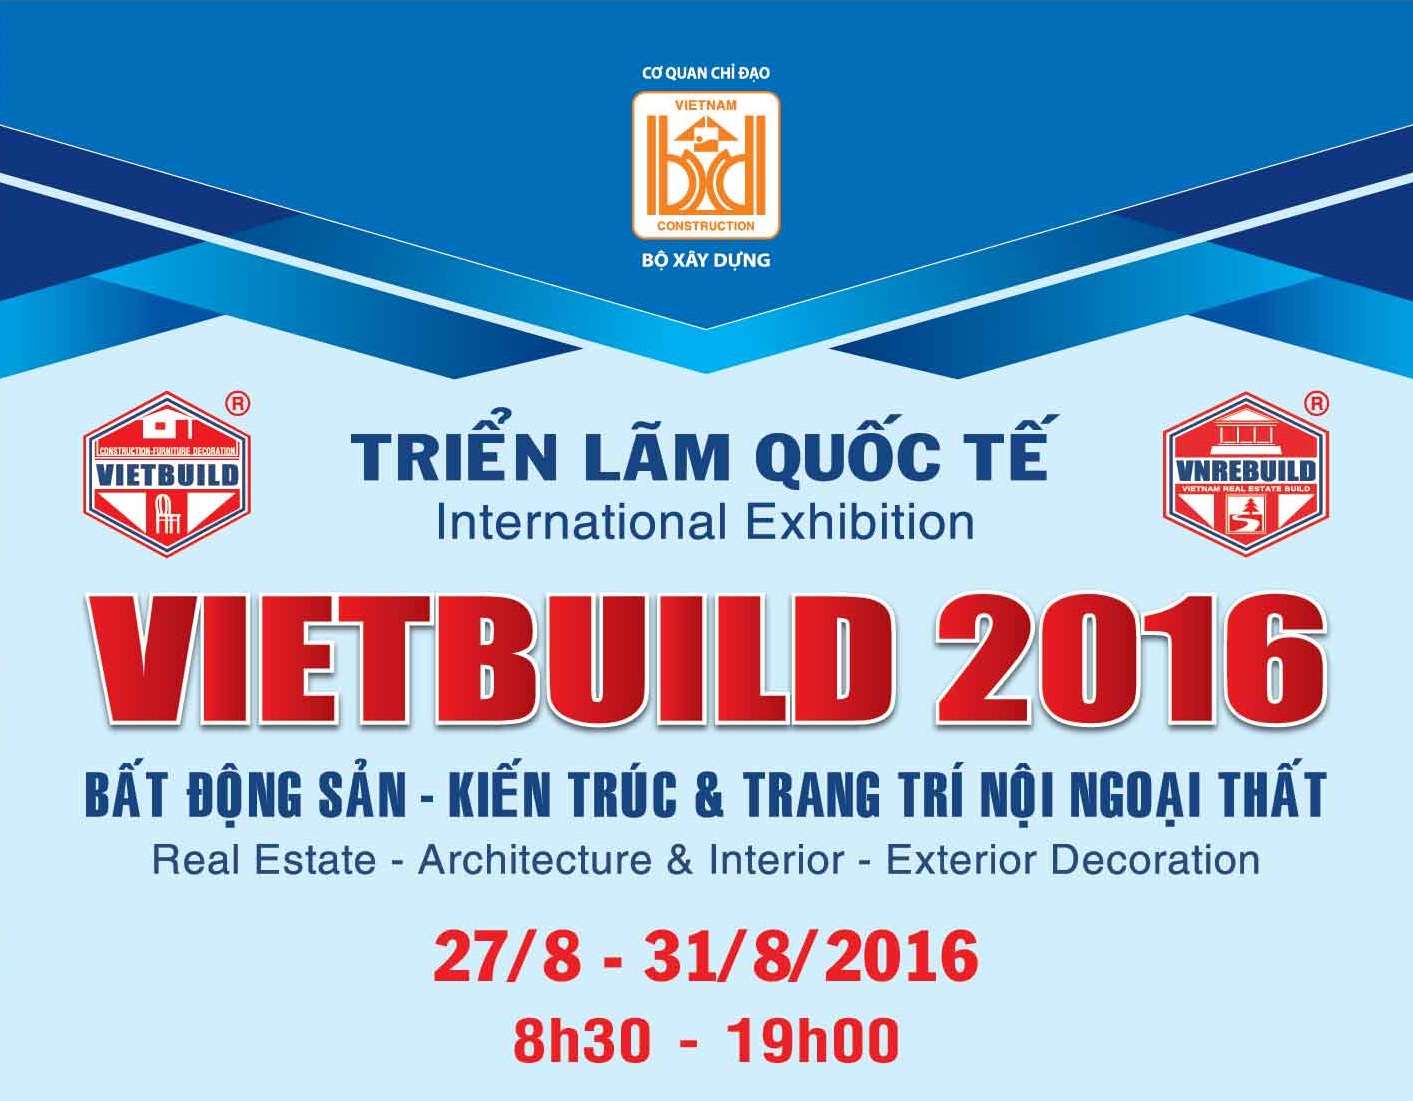 VietBuild Exhibition 2016 - Ho Chi Minh City